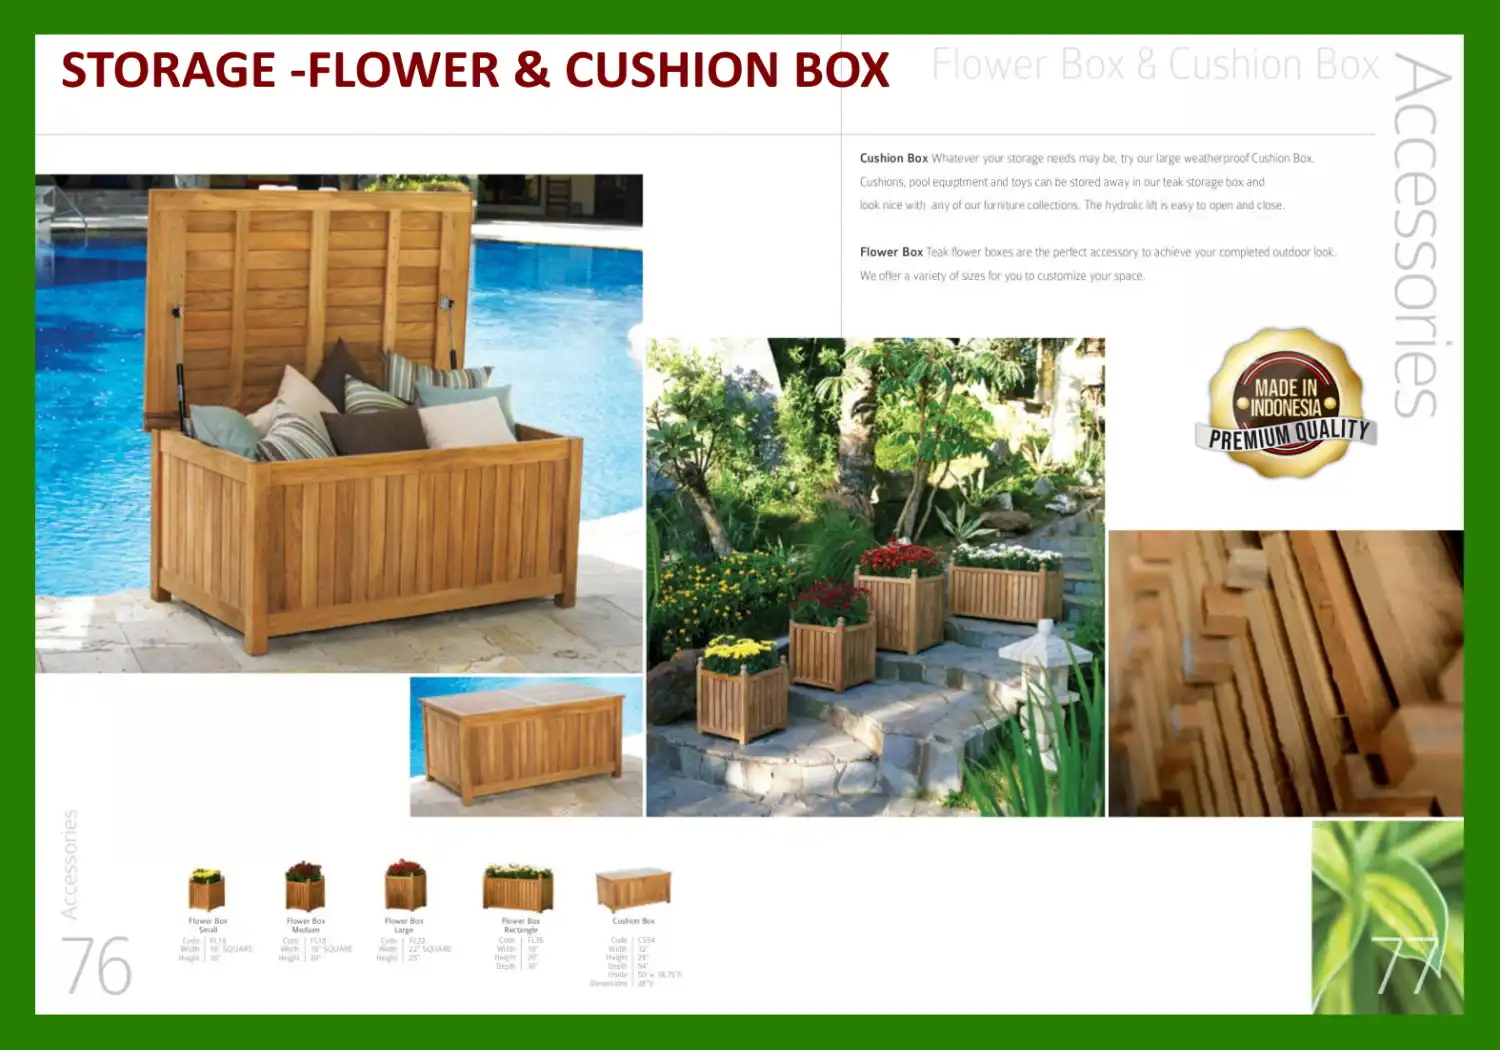 STORAGE -FLOWER & CUSHION BOX